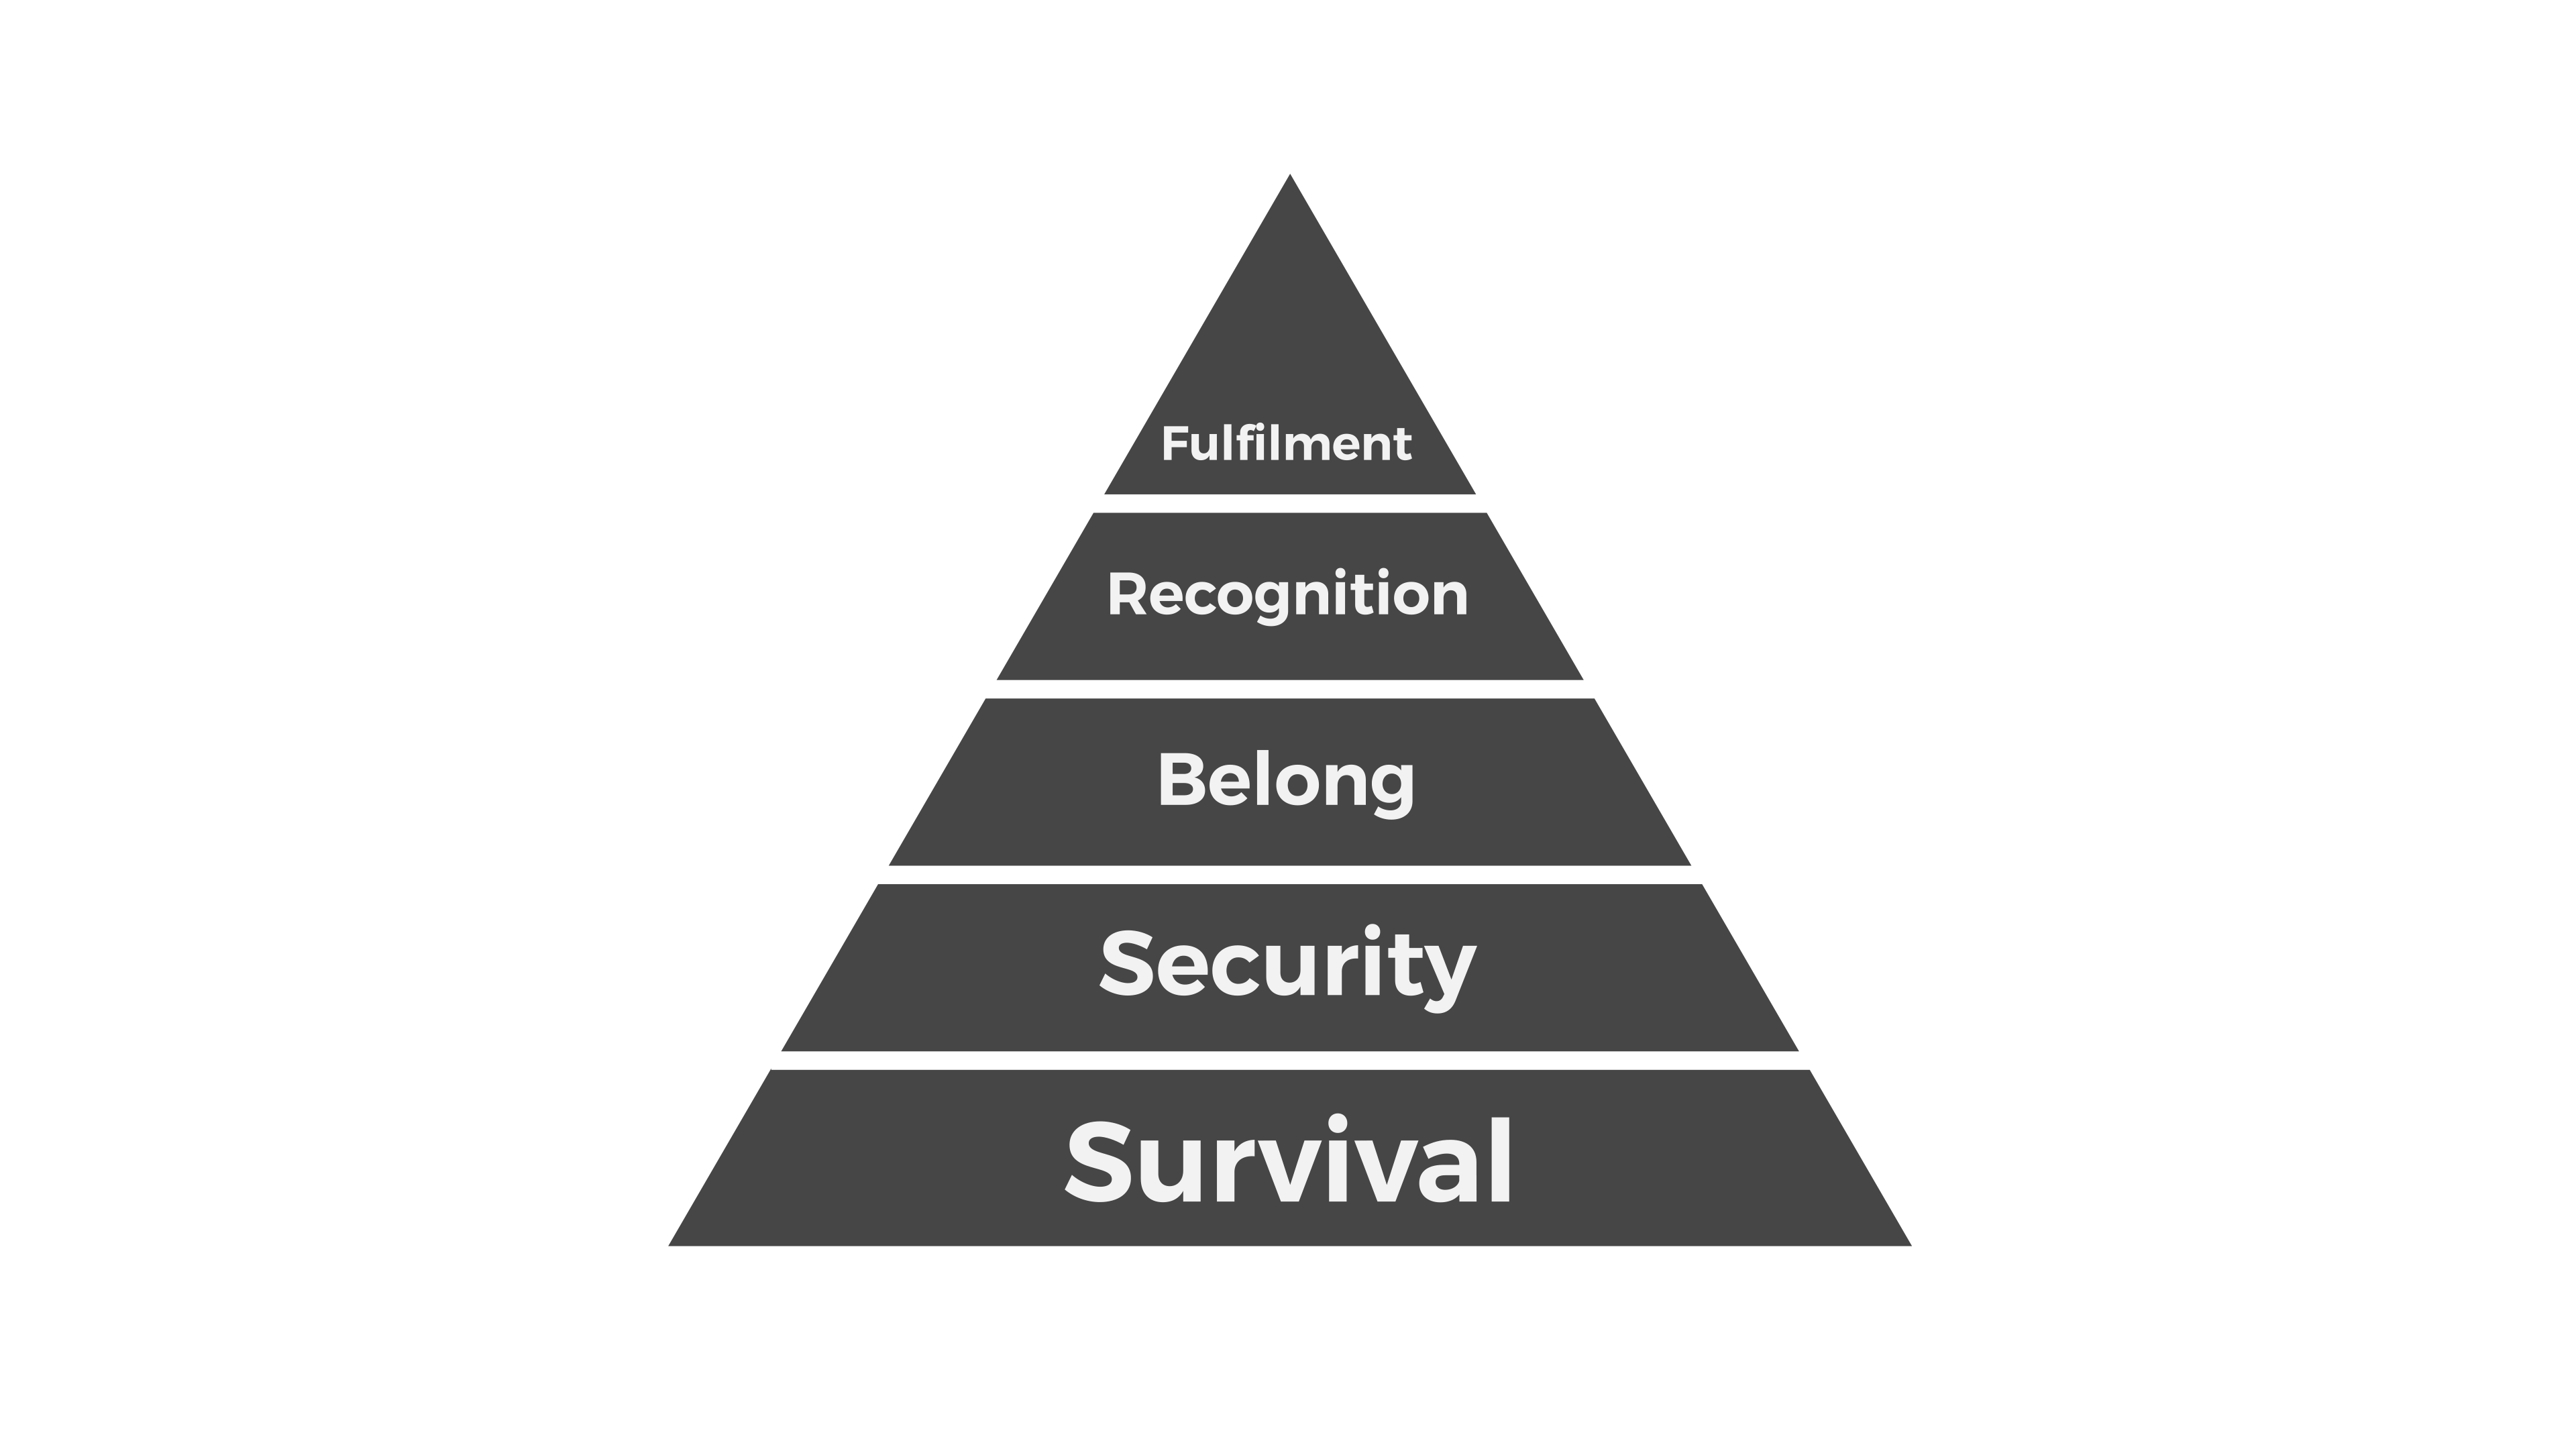 Pyramid of universal needs according to Maslow